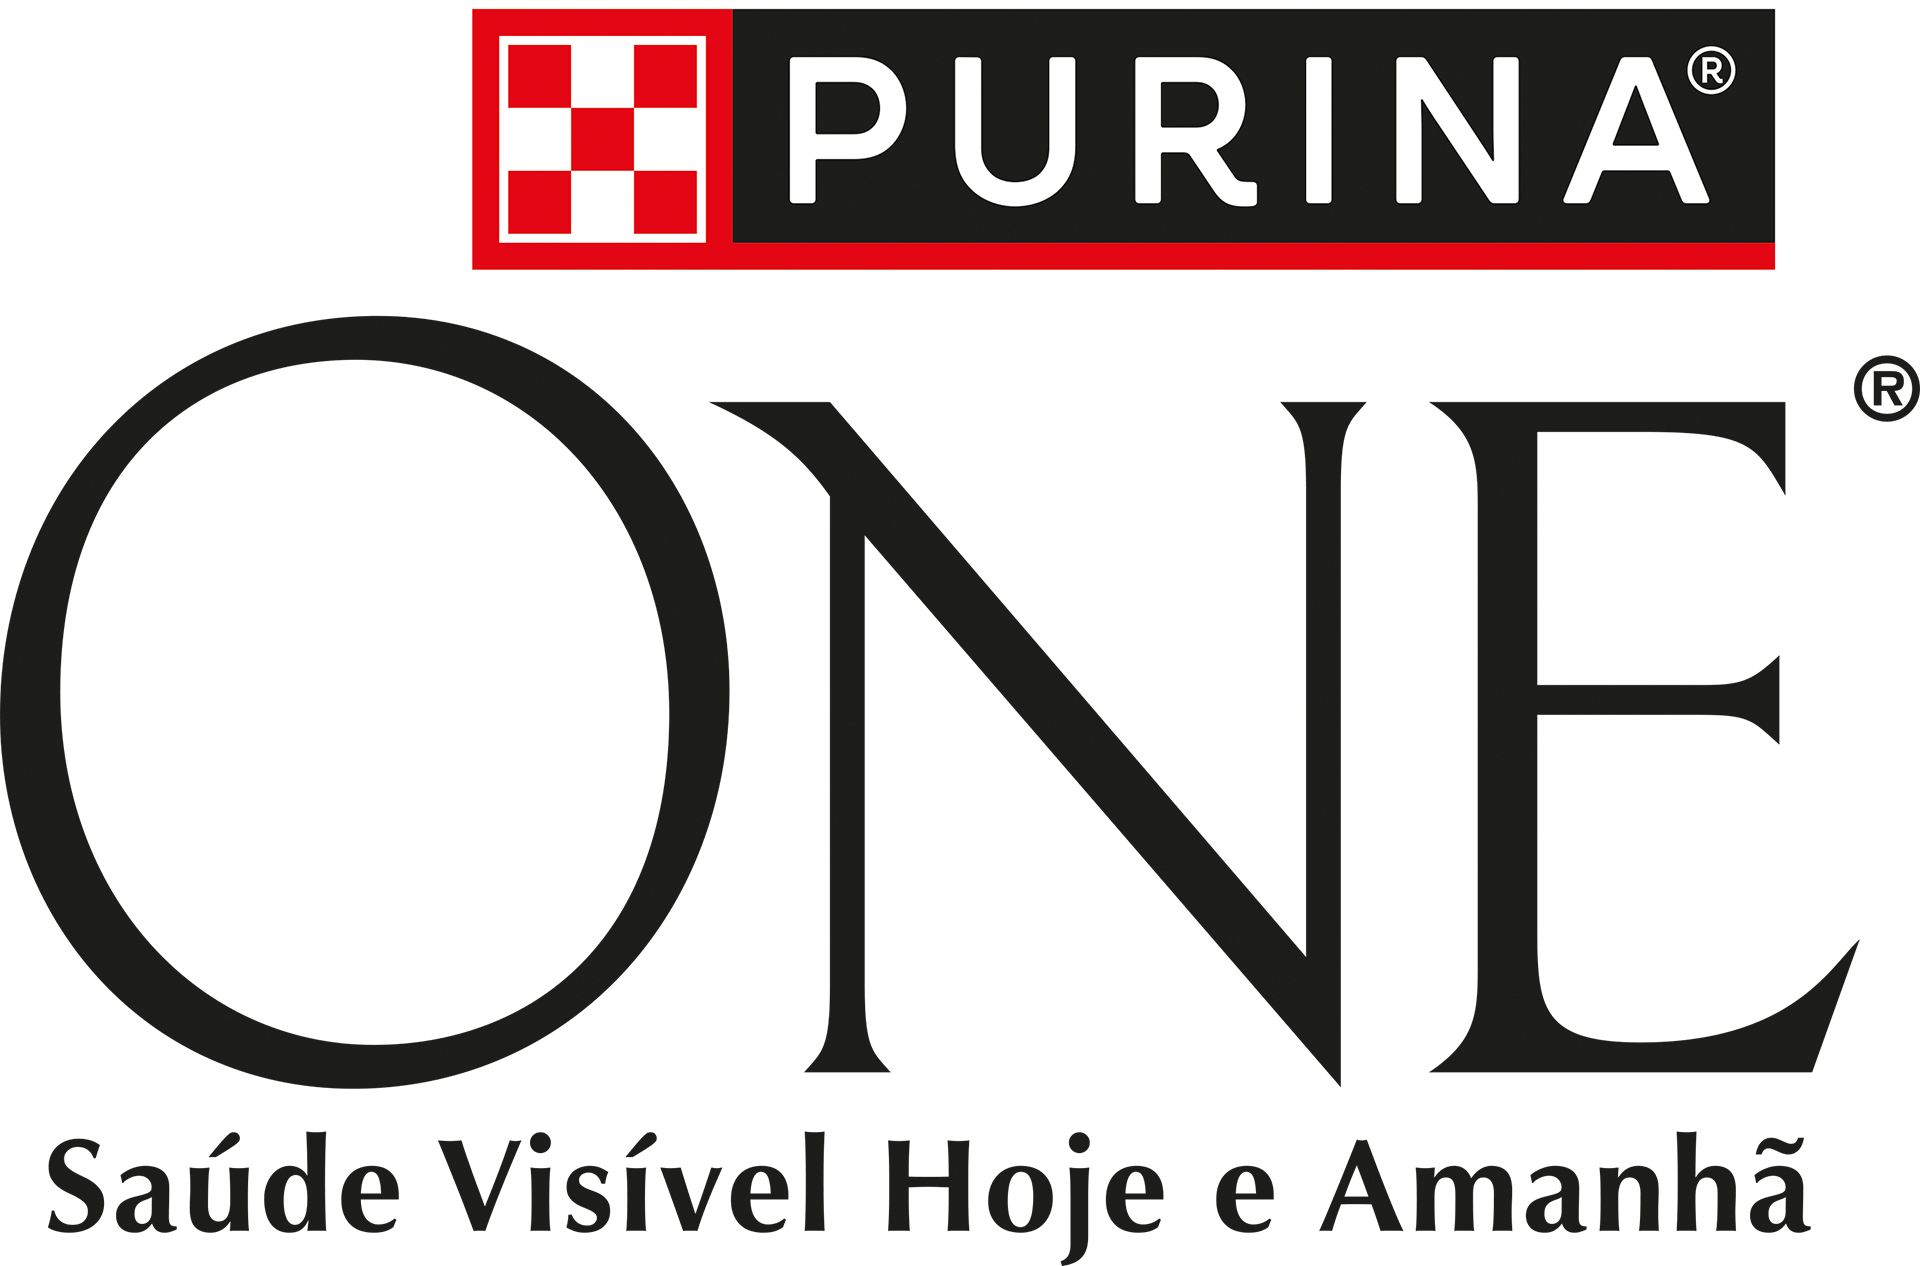 Purina ONE logo